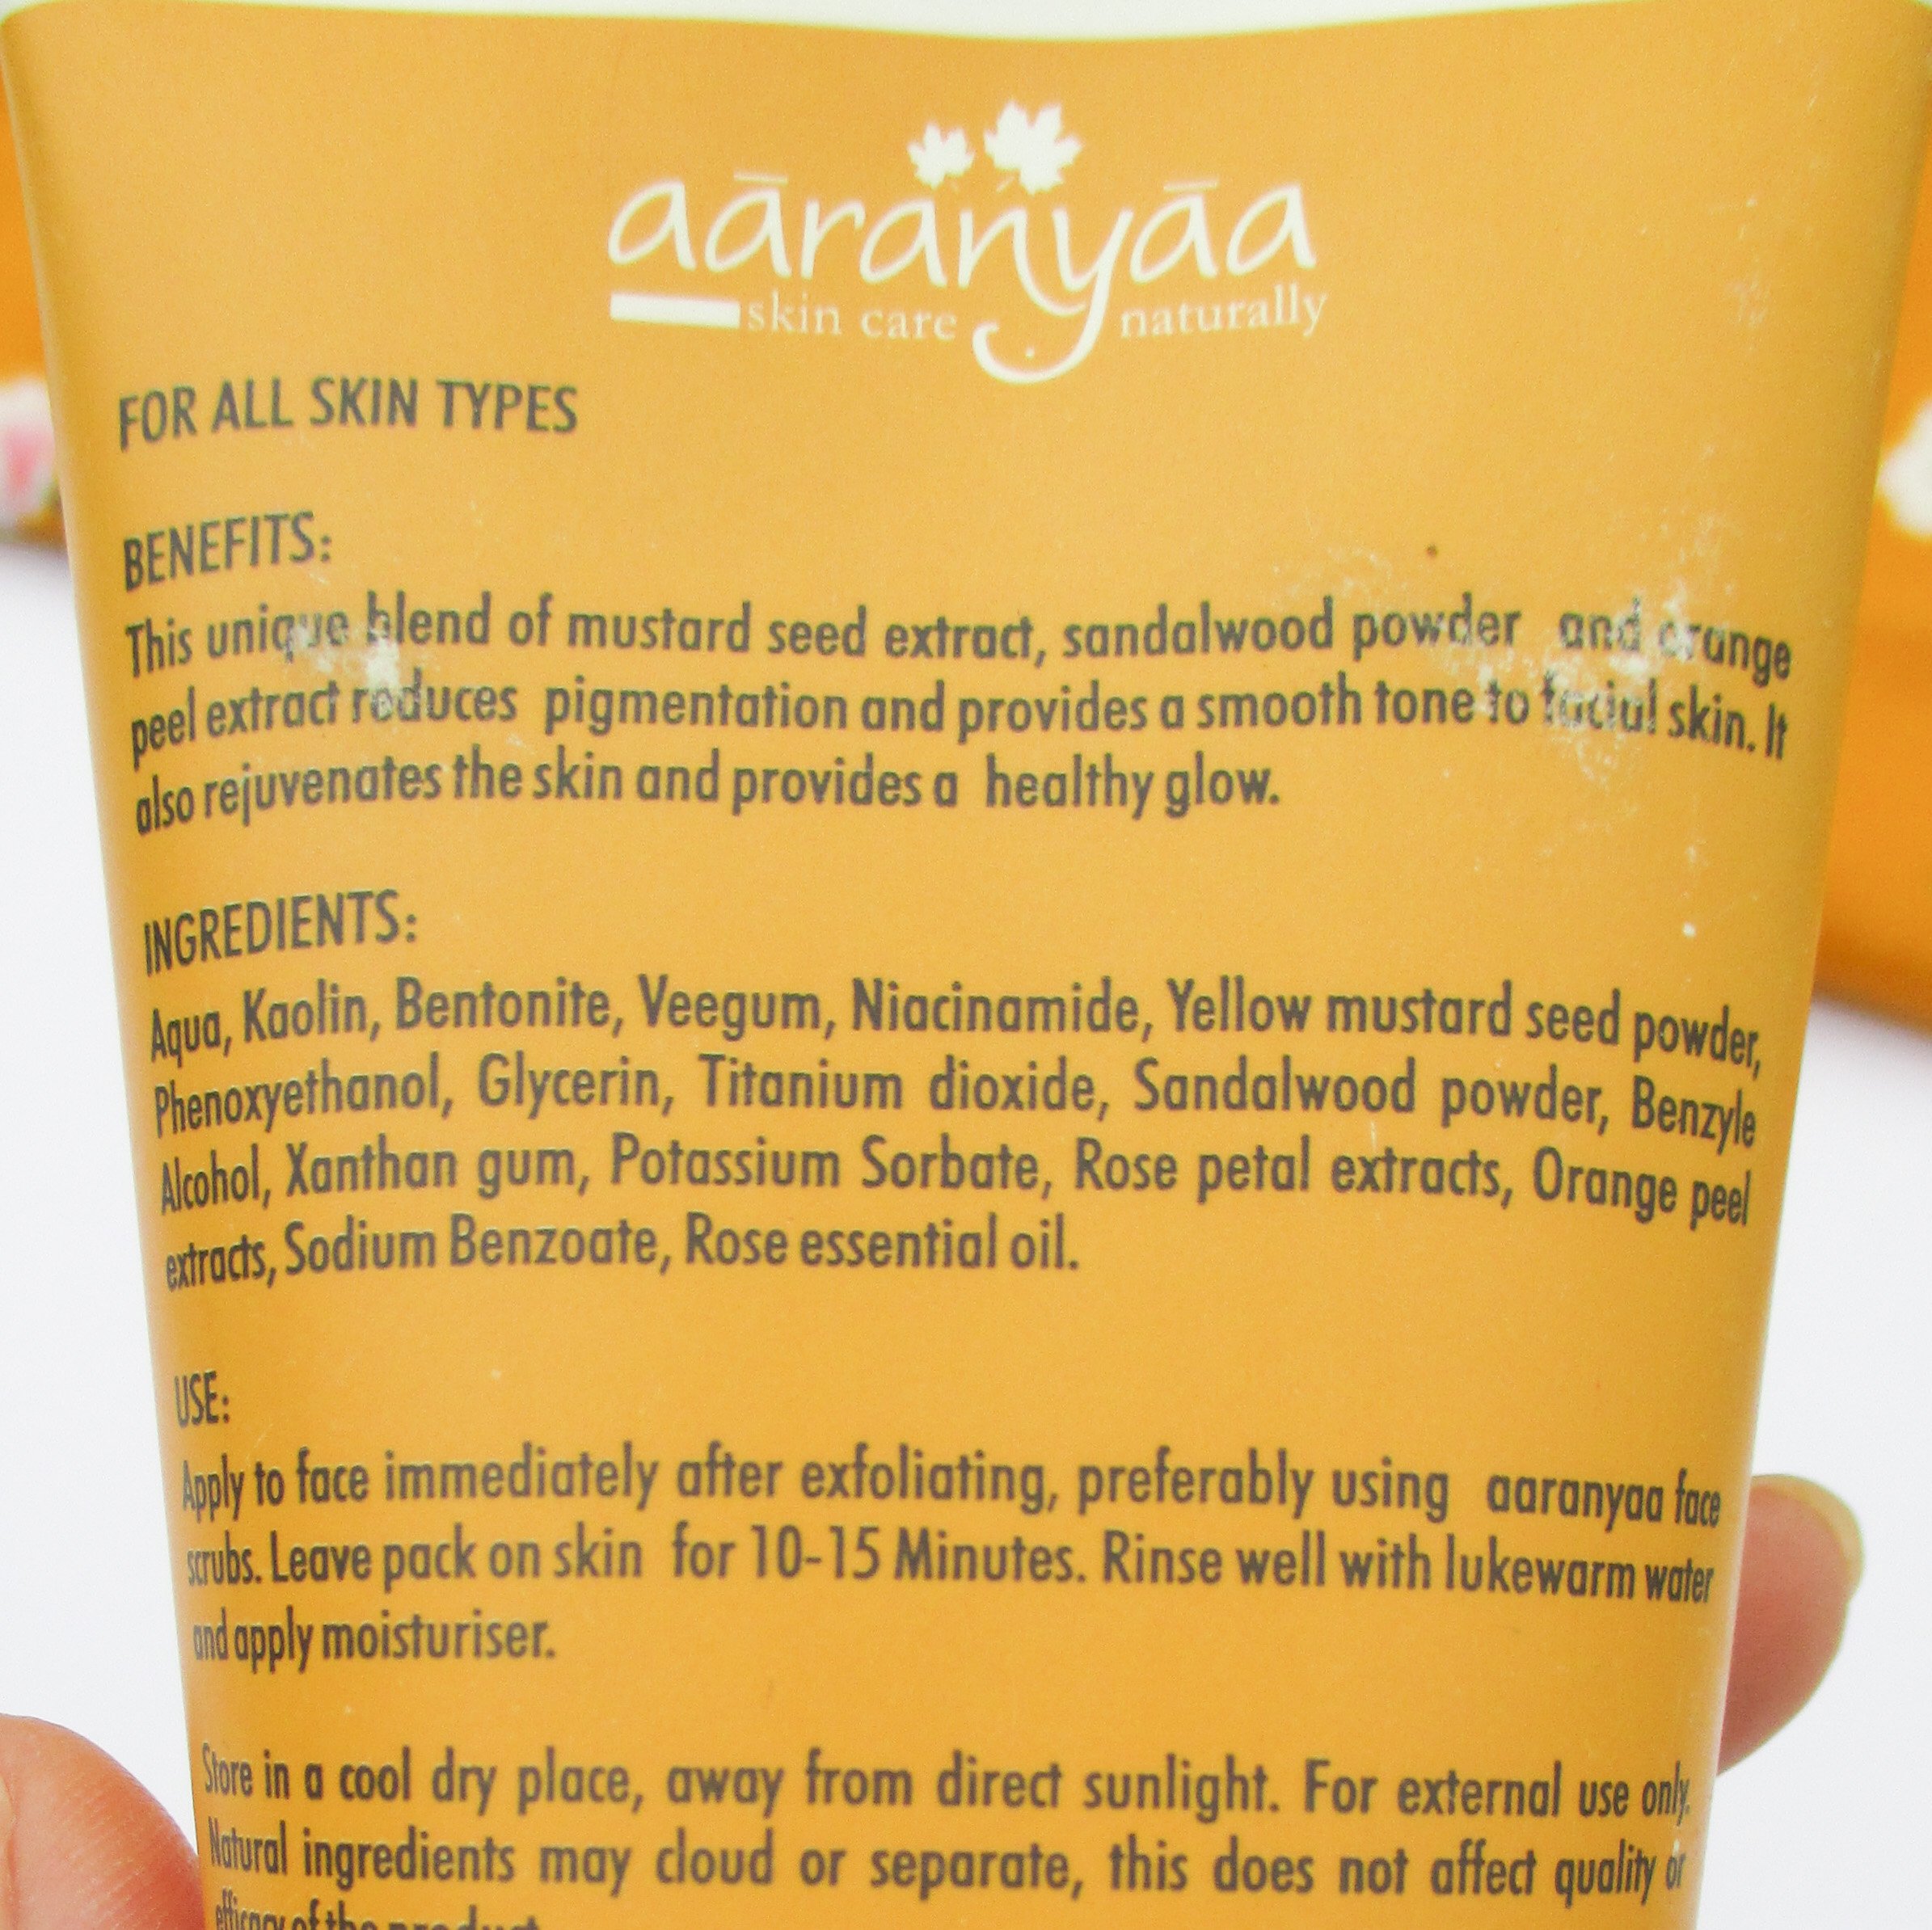 Aaranyaa Rejuvenating Anti Blemish Pack - Orange and Sandalwood Ingredients & Directions